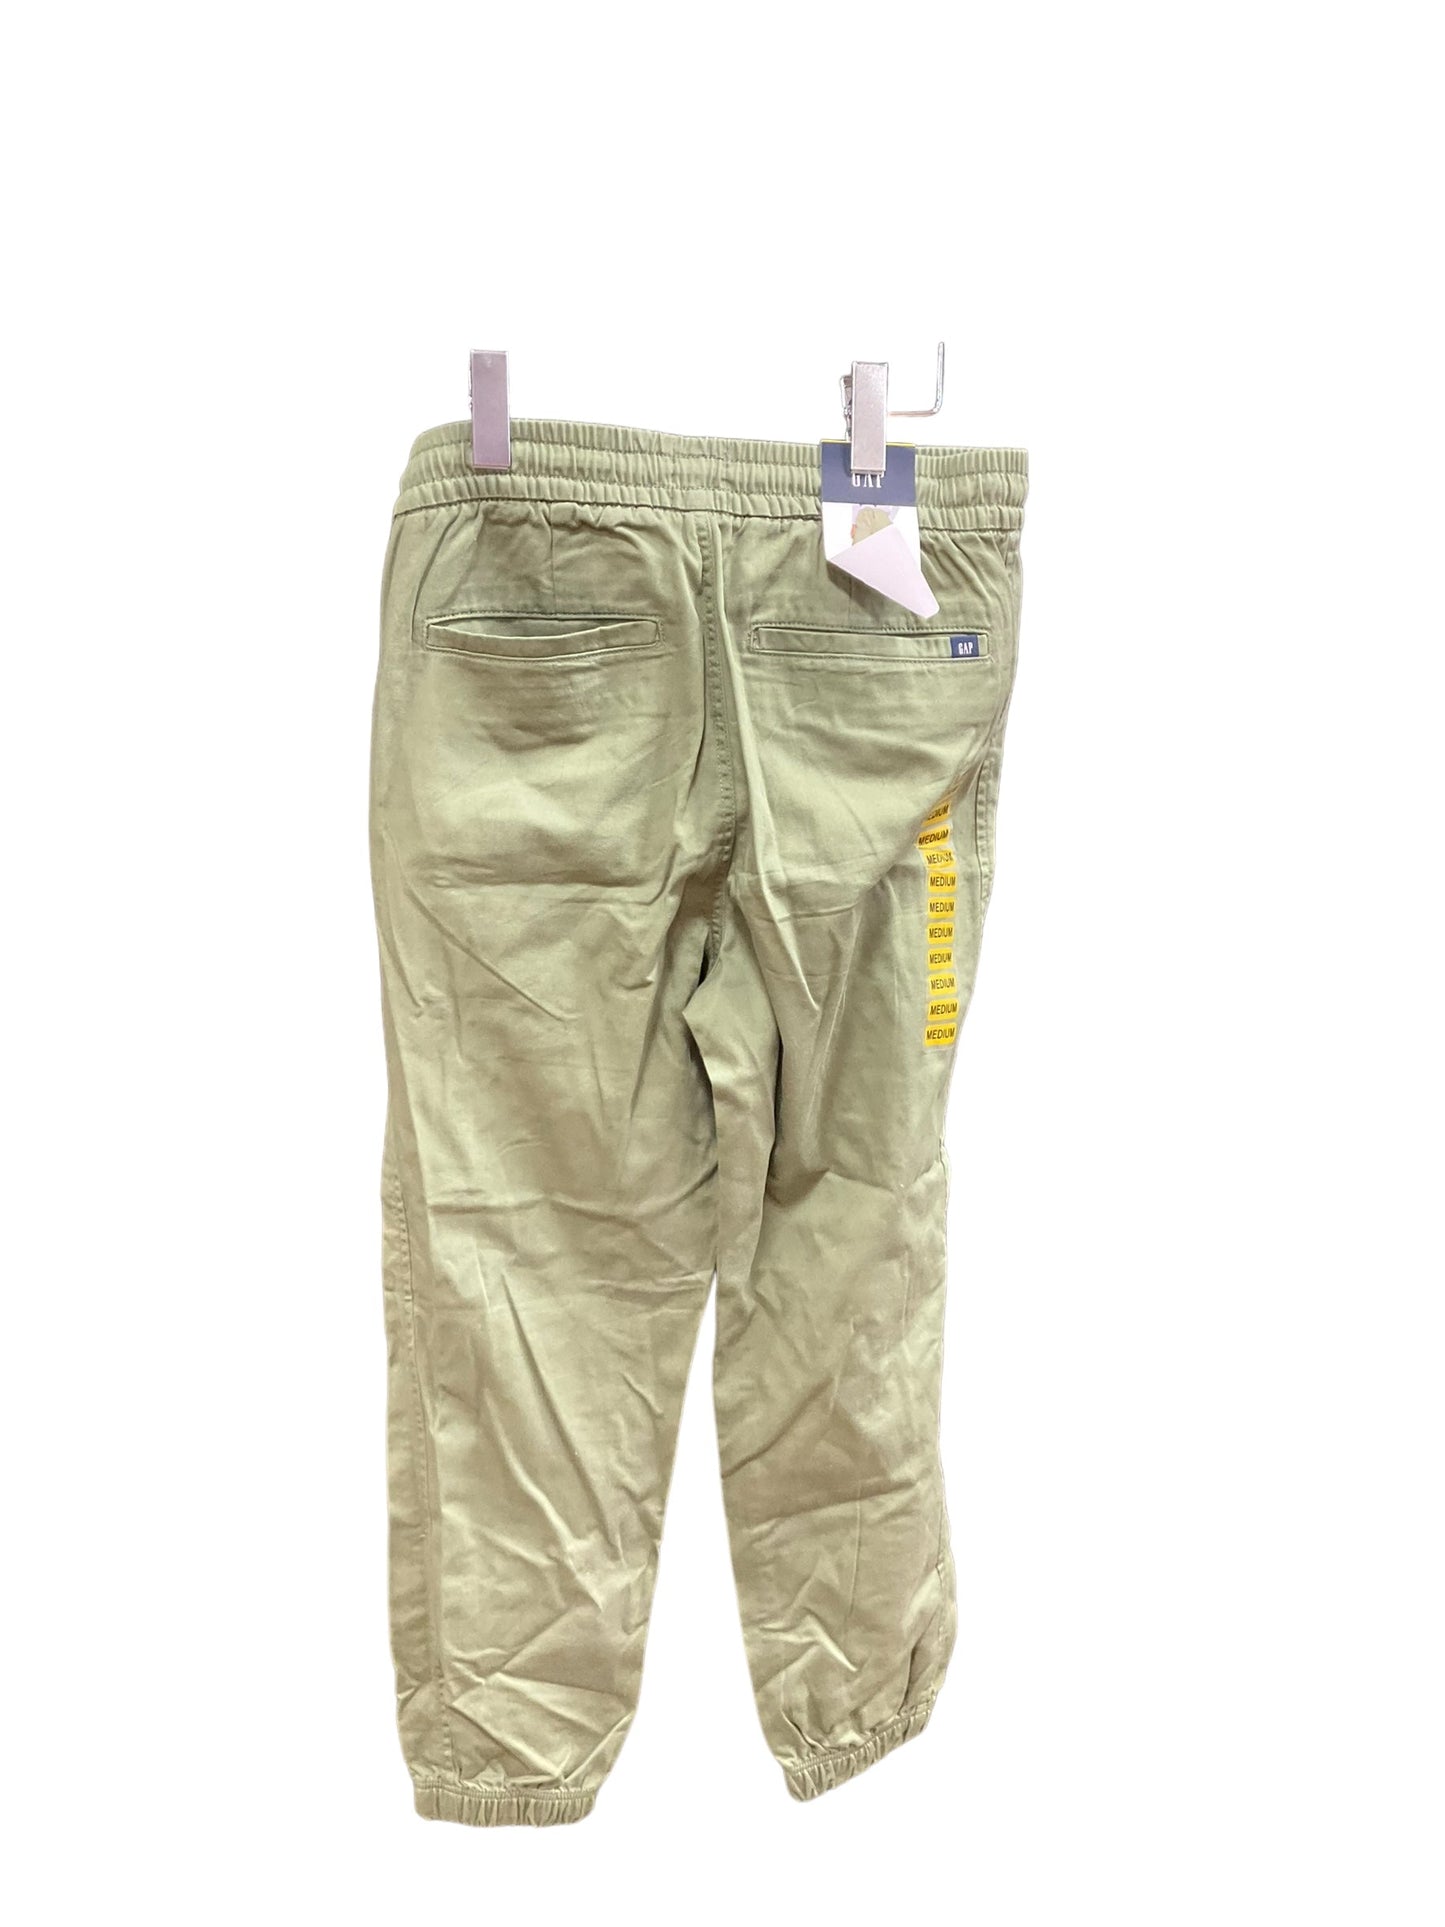 Green Pants Joggers Gap, Size M